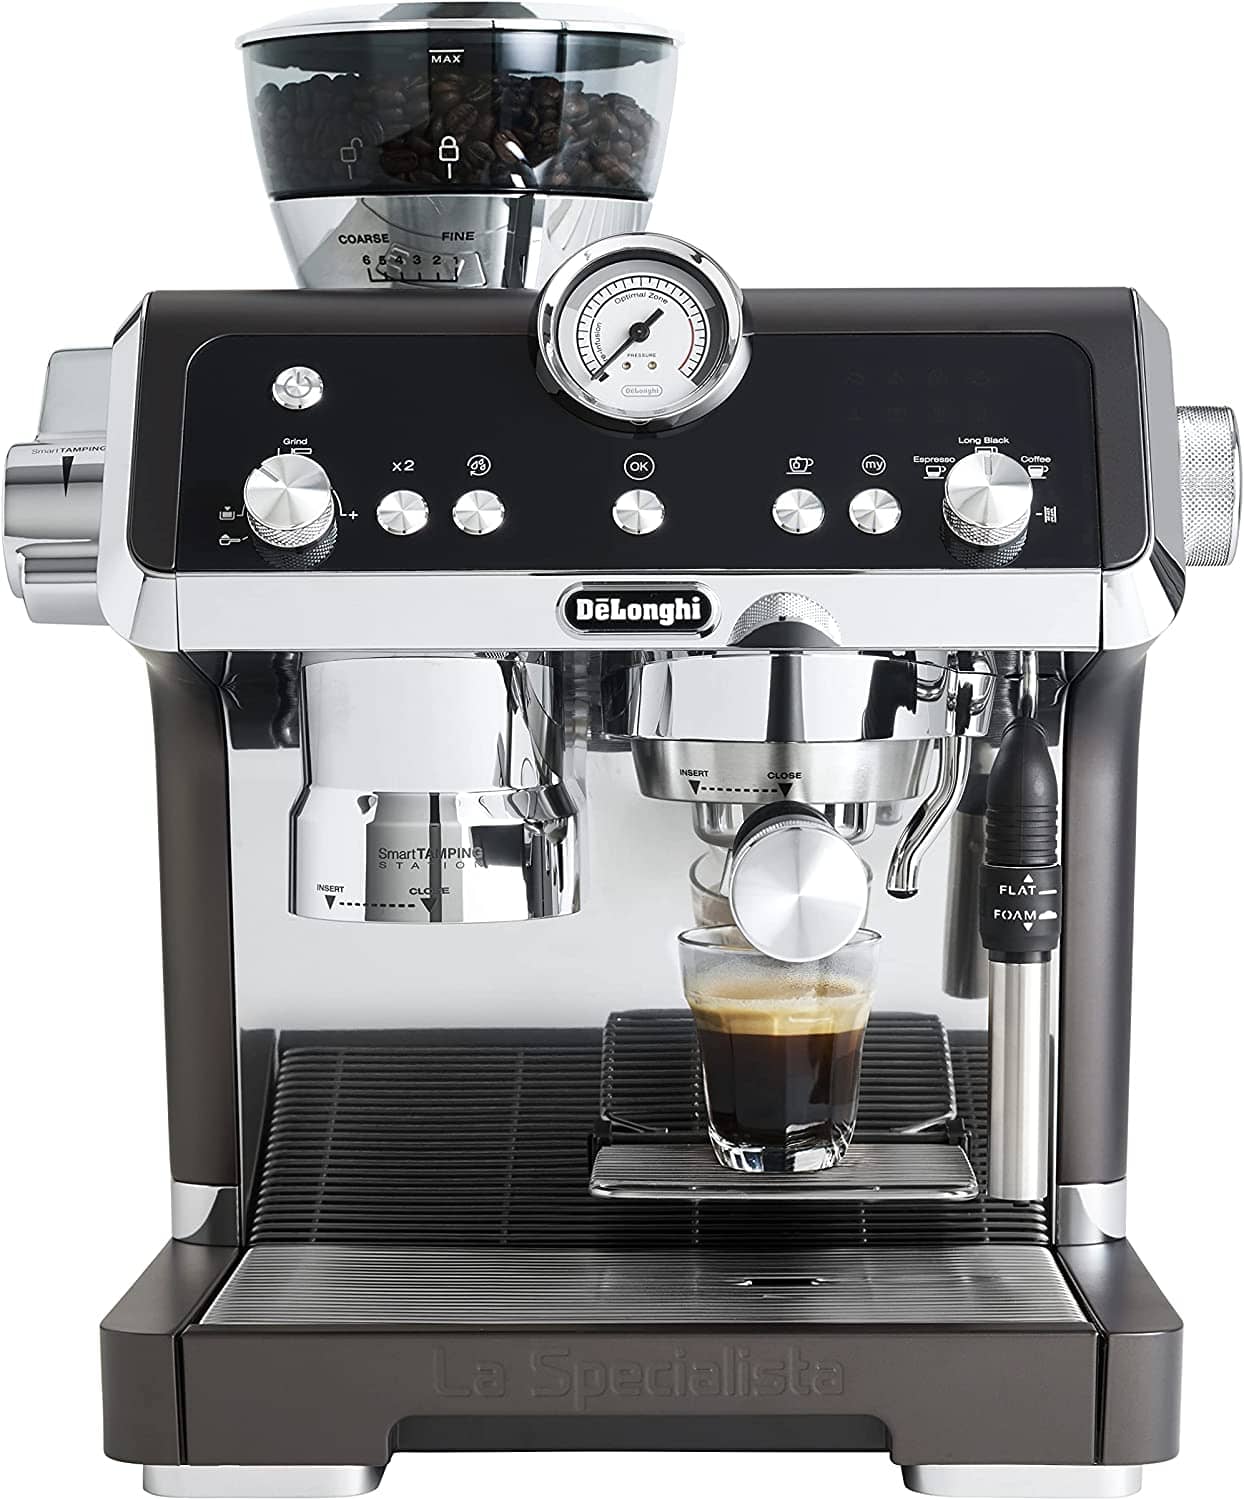 Uredelighed hit spil DeLonghi La Specialista Black Espresso Coffee Machine For Barista Quality  Coffees - De-Brewerz.com